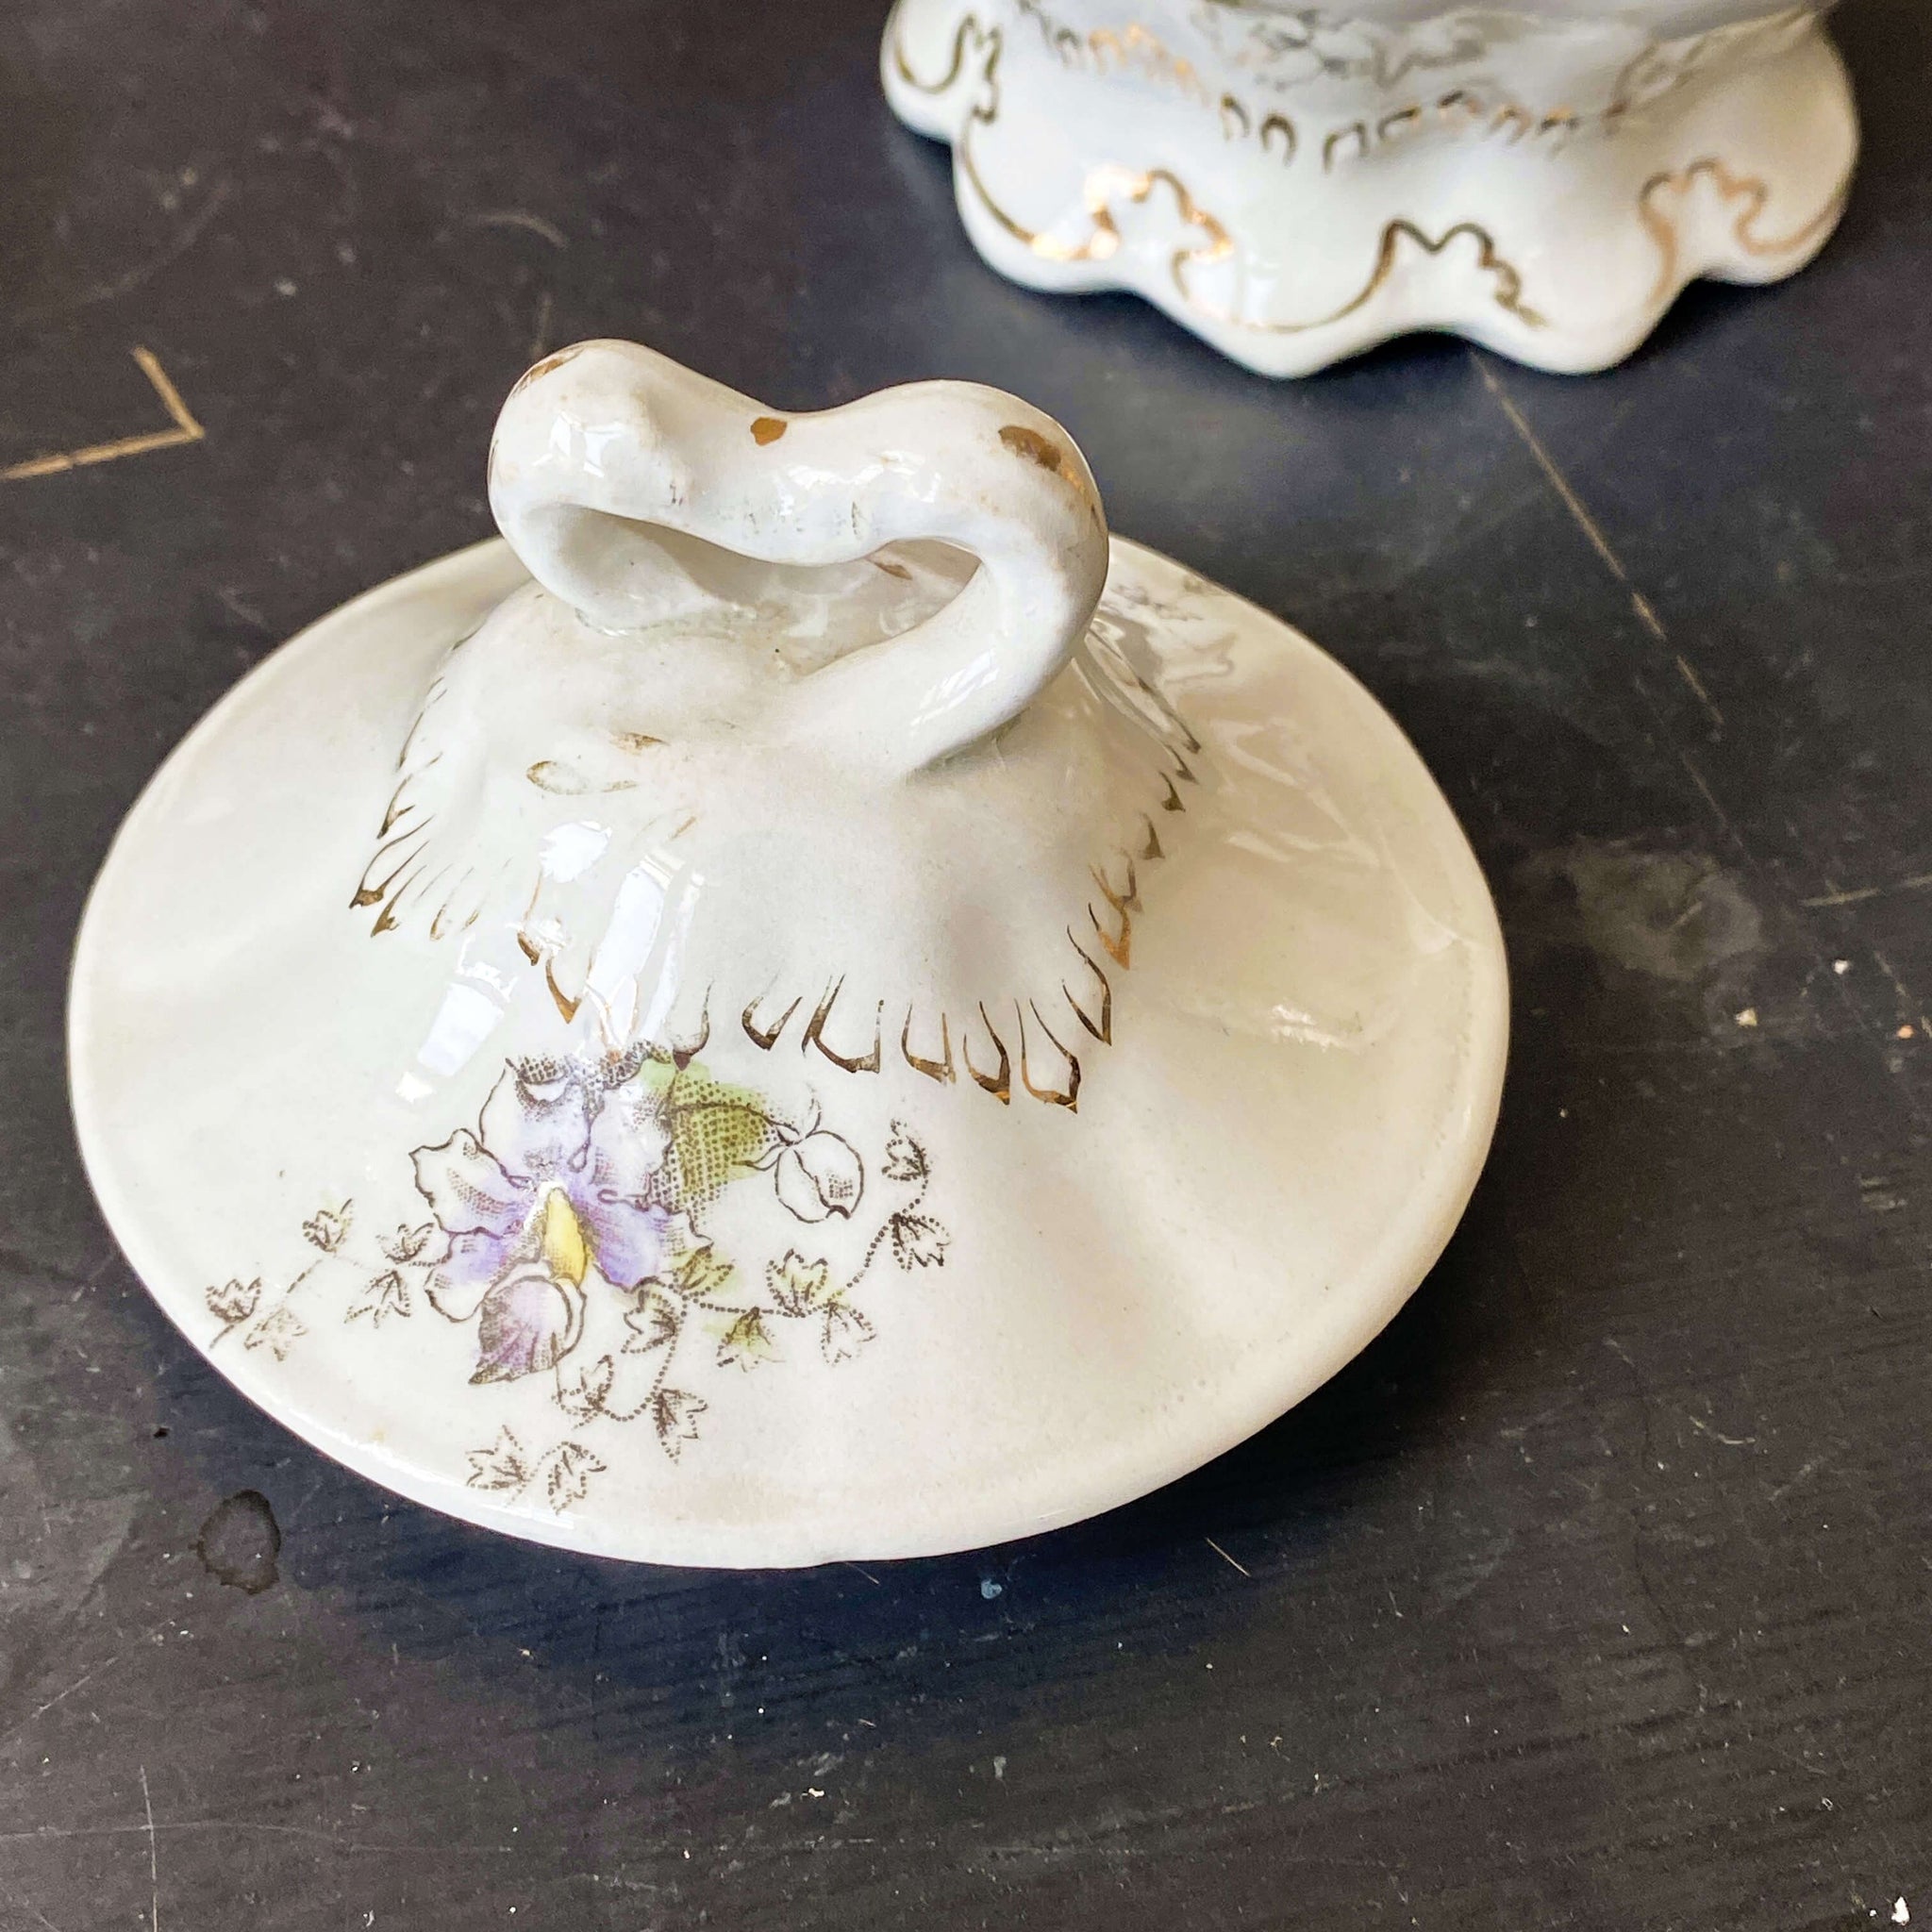 Antique Handpainted Floral Sugar Bowl with Lid - Burfords Porcelain circa 1879-1904